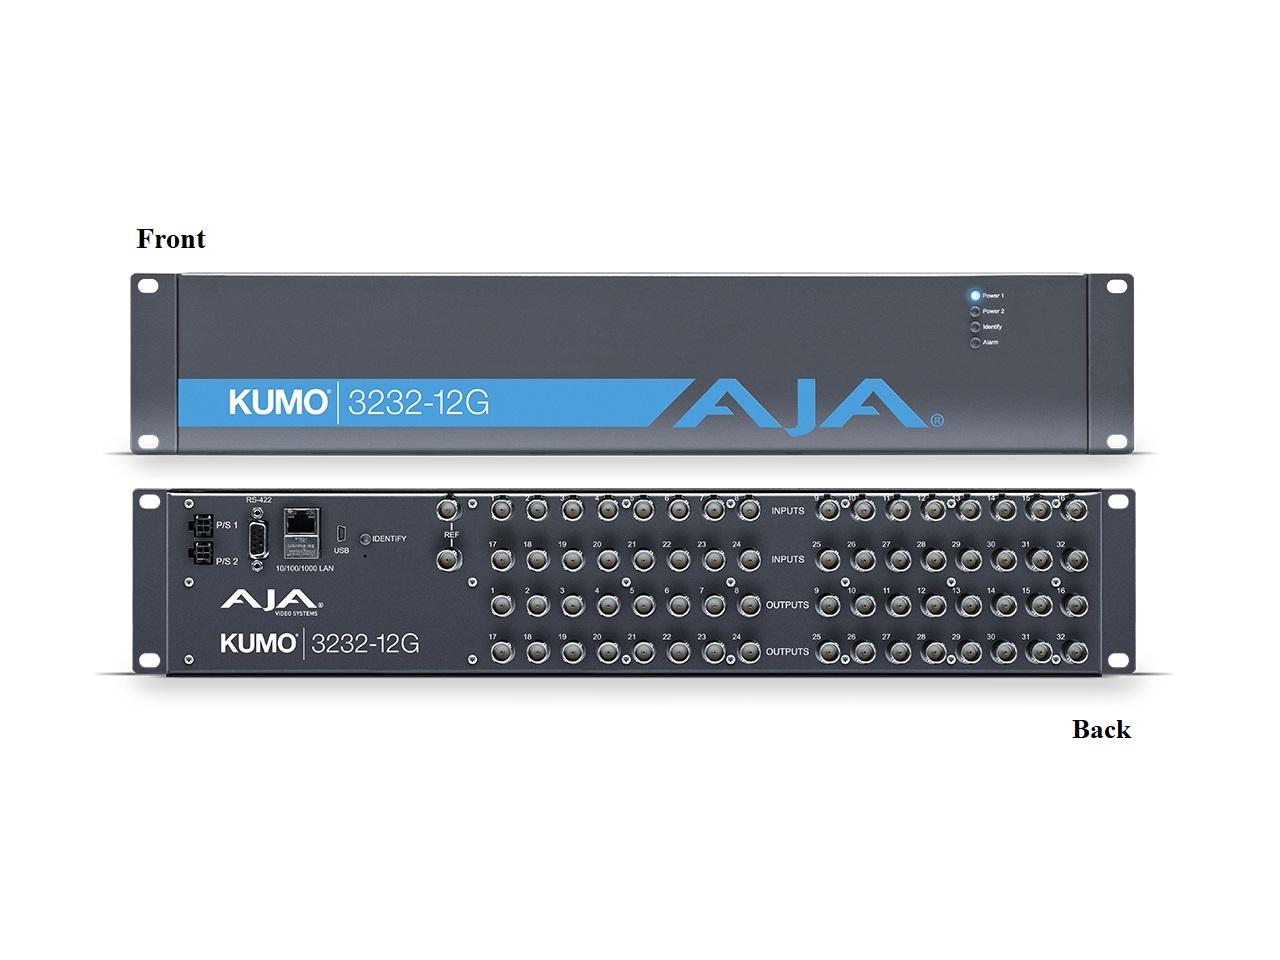 KUMO 3232-12G Compact 32x32 12G-SDI Router by AJA